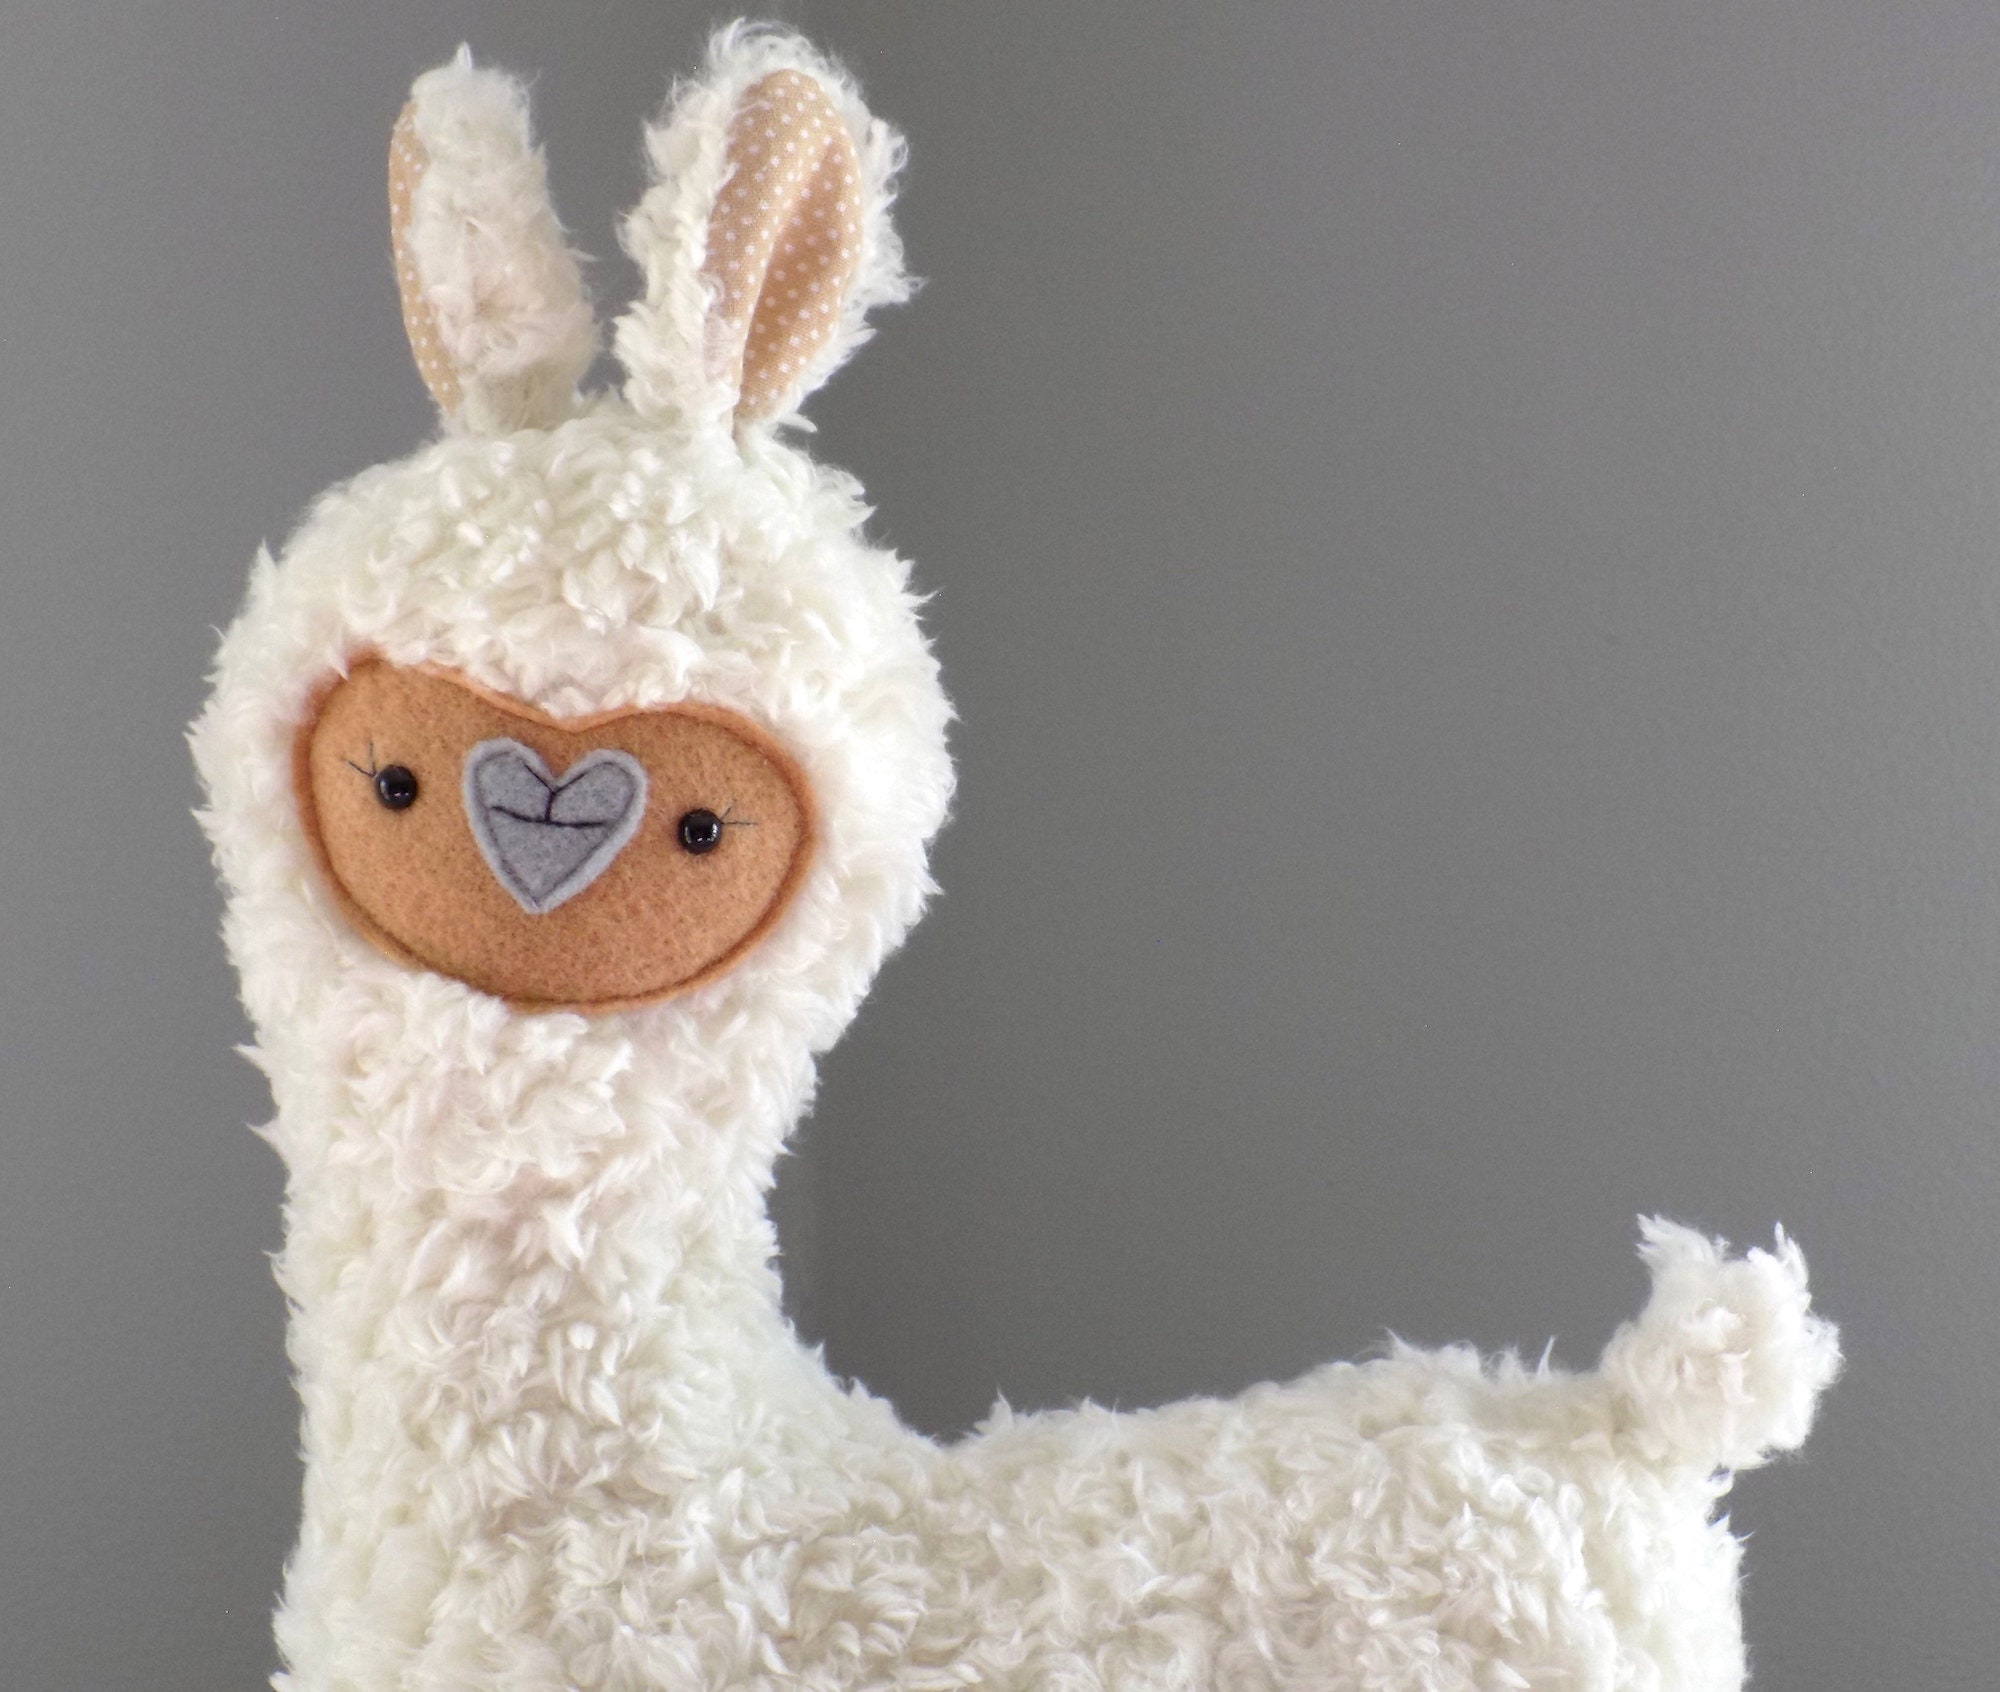 Llama alpaca stuffed toy in cream with tan and grey face | Etsy